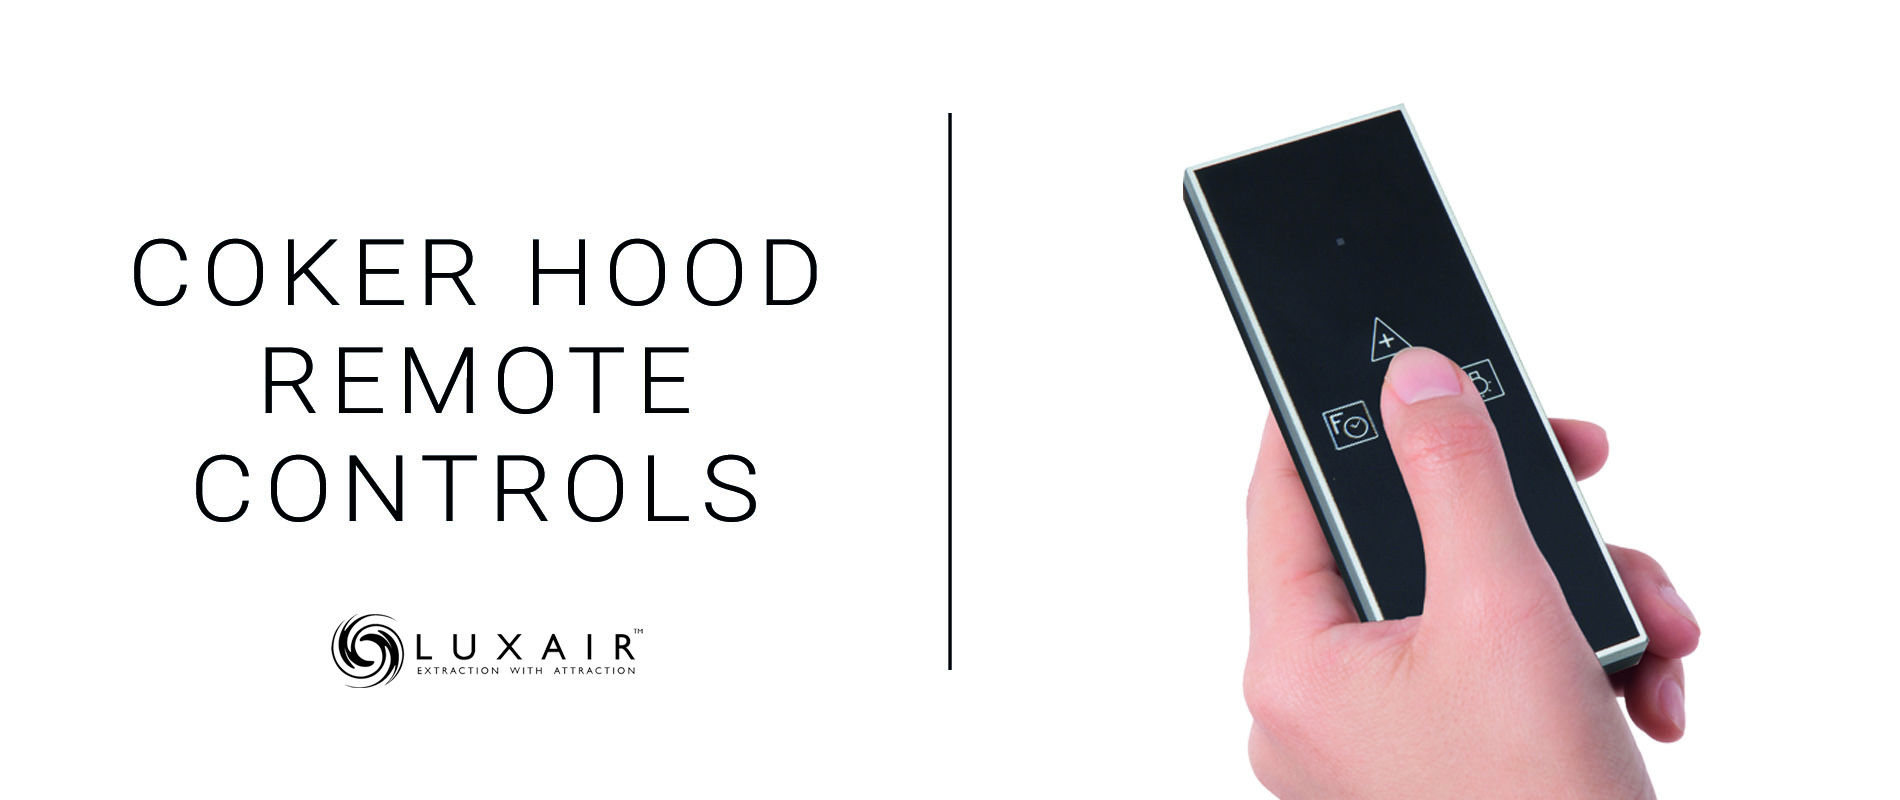 Cooker Hood Remote Controls